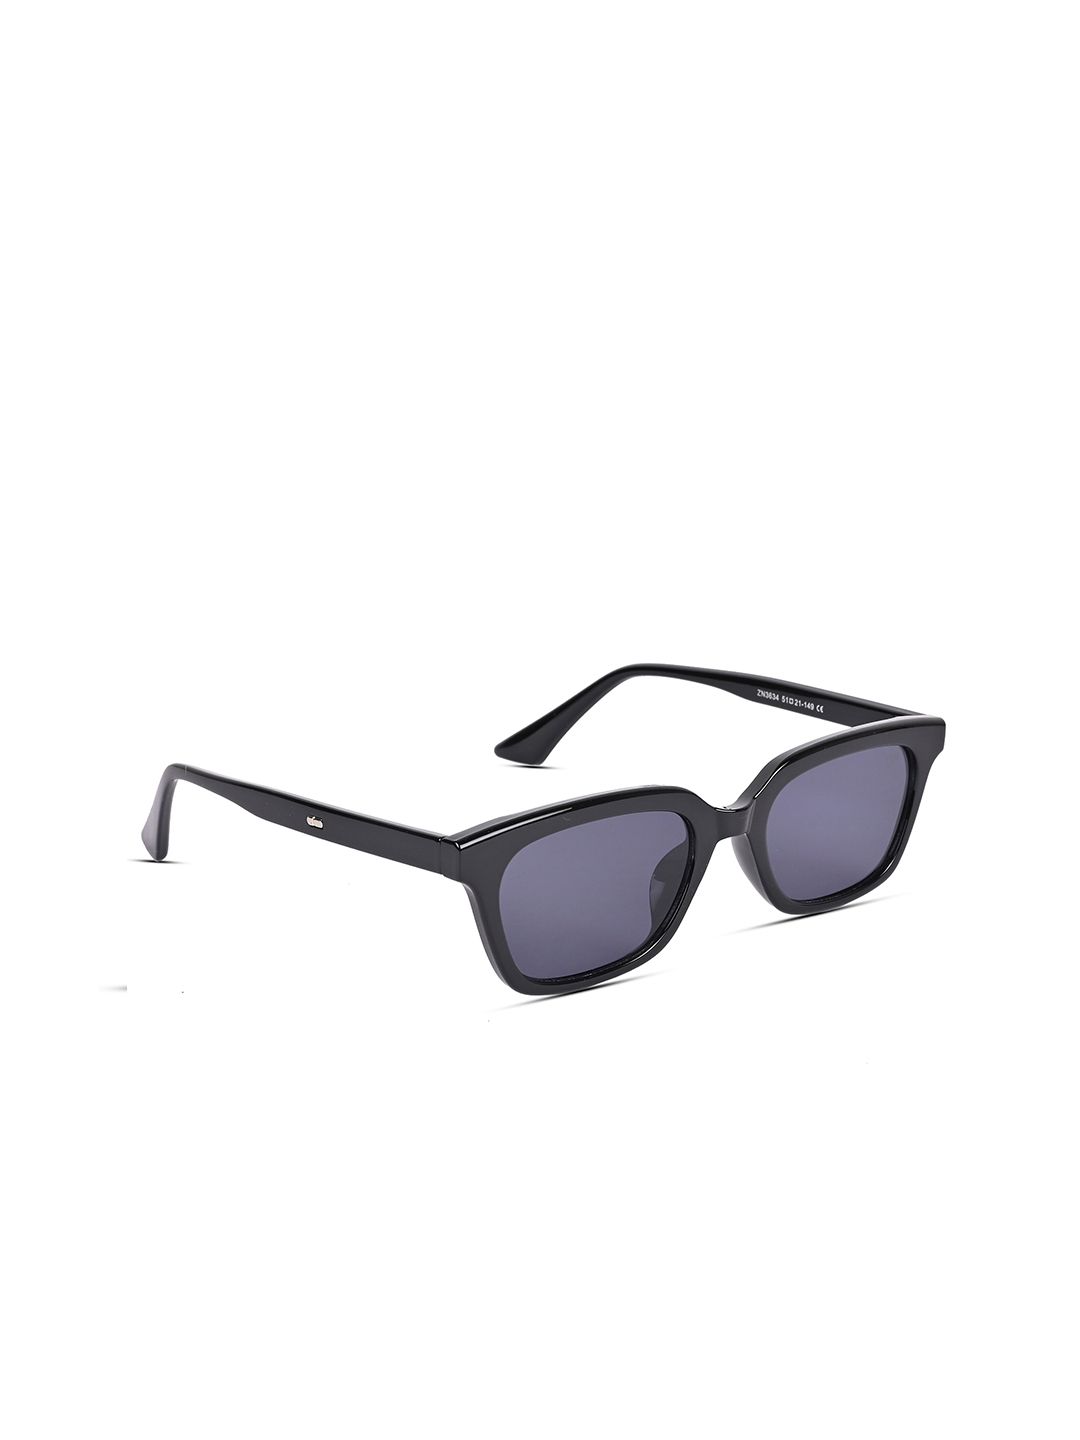 Voyage Unisex Black Lens & Black Wayfarer UV Protected Lens Sunglasses Price in India